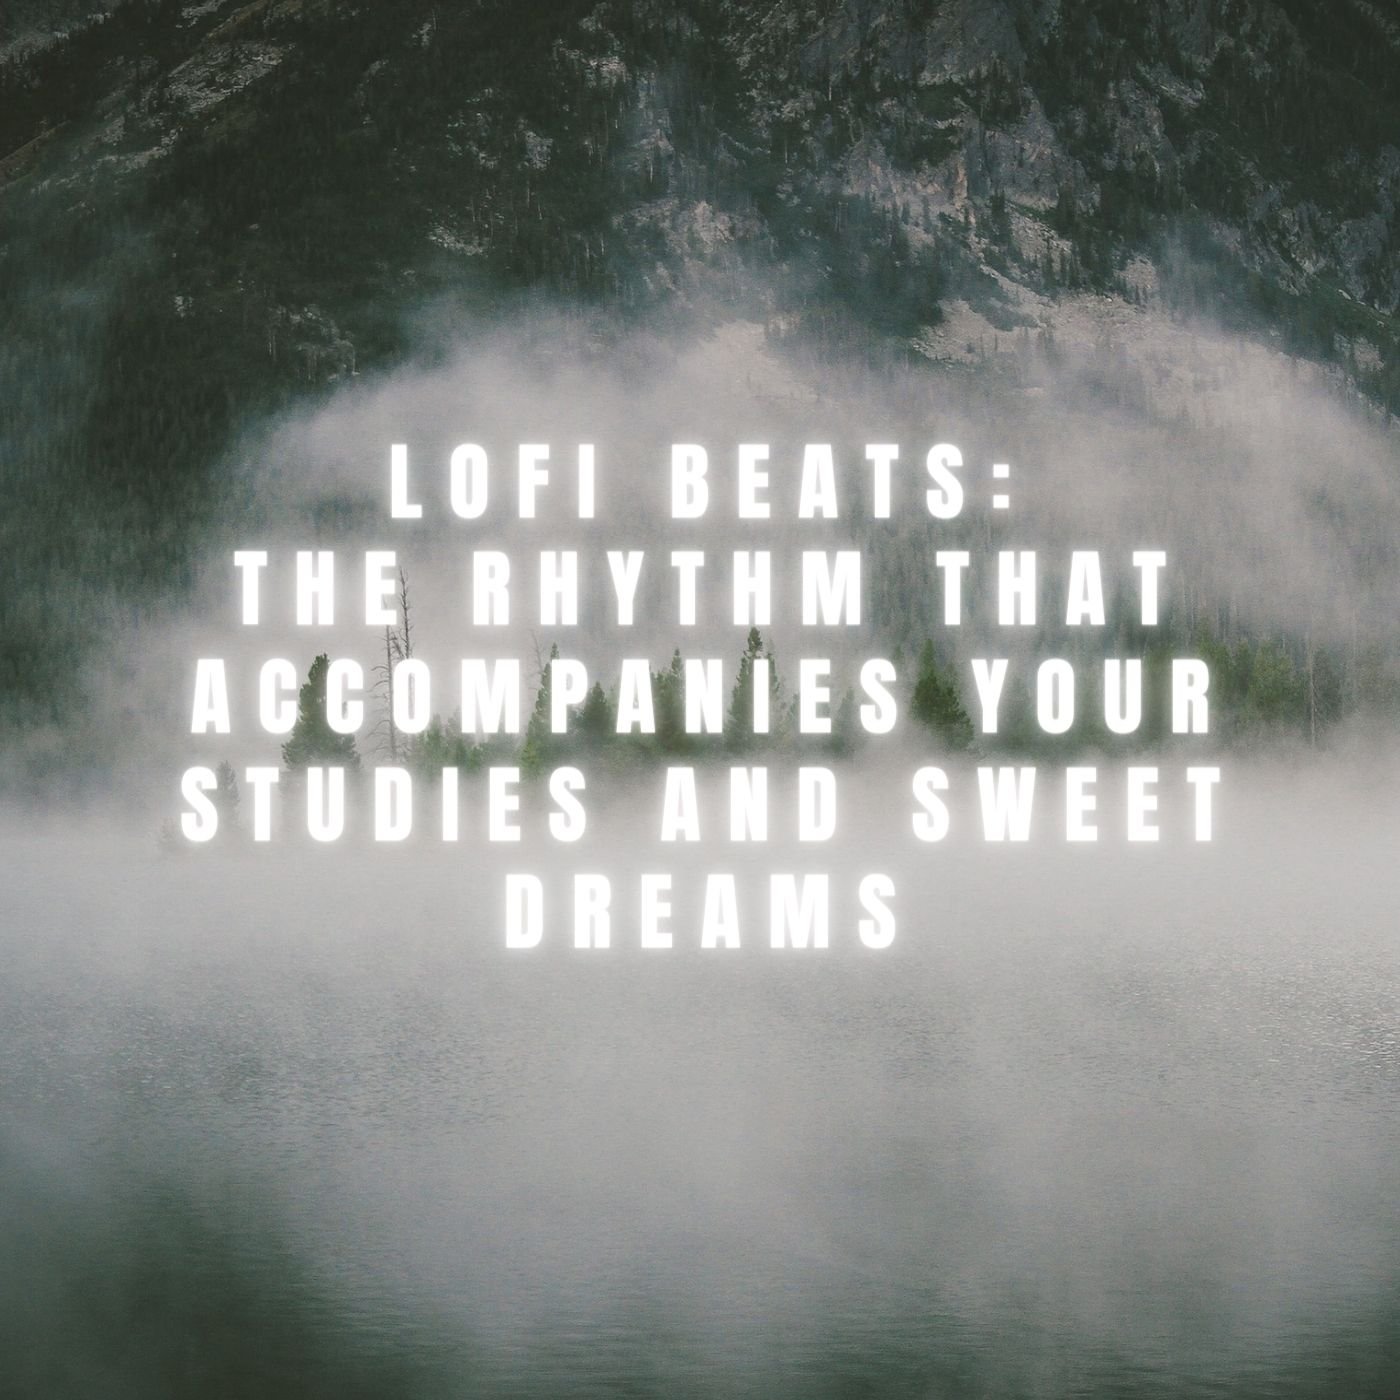 Lofi Beats: The Rhythm that Accompanies Your Studies and Sweet Dreams